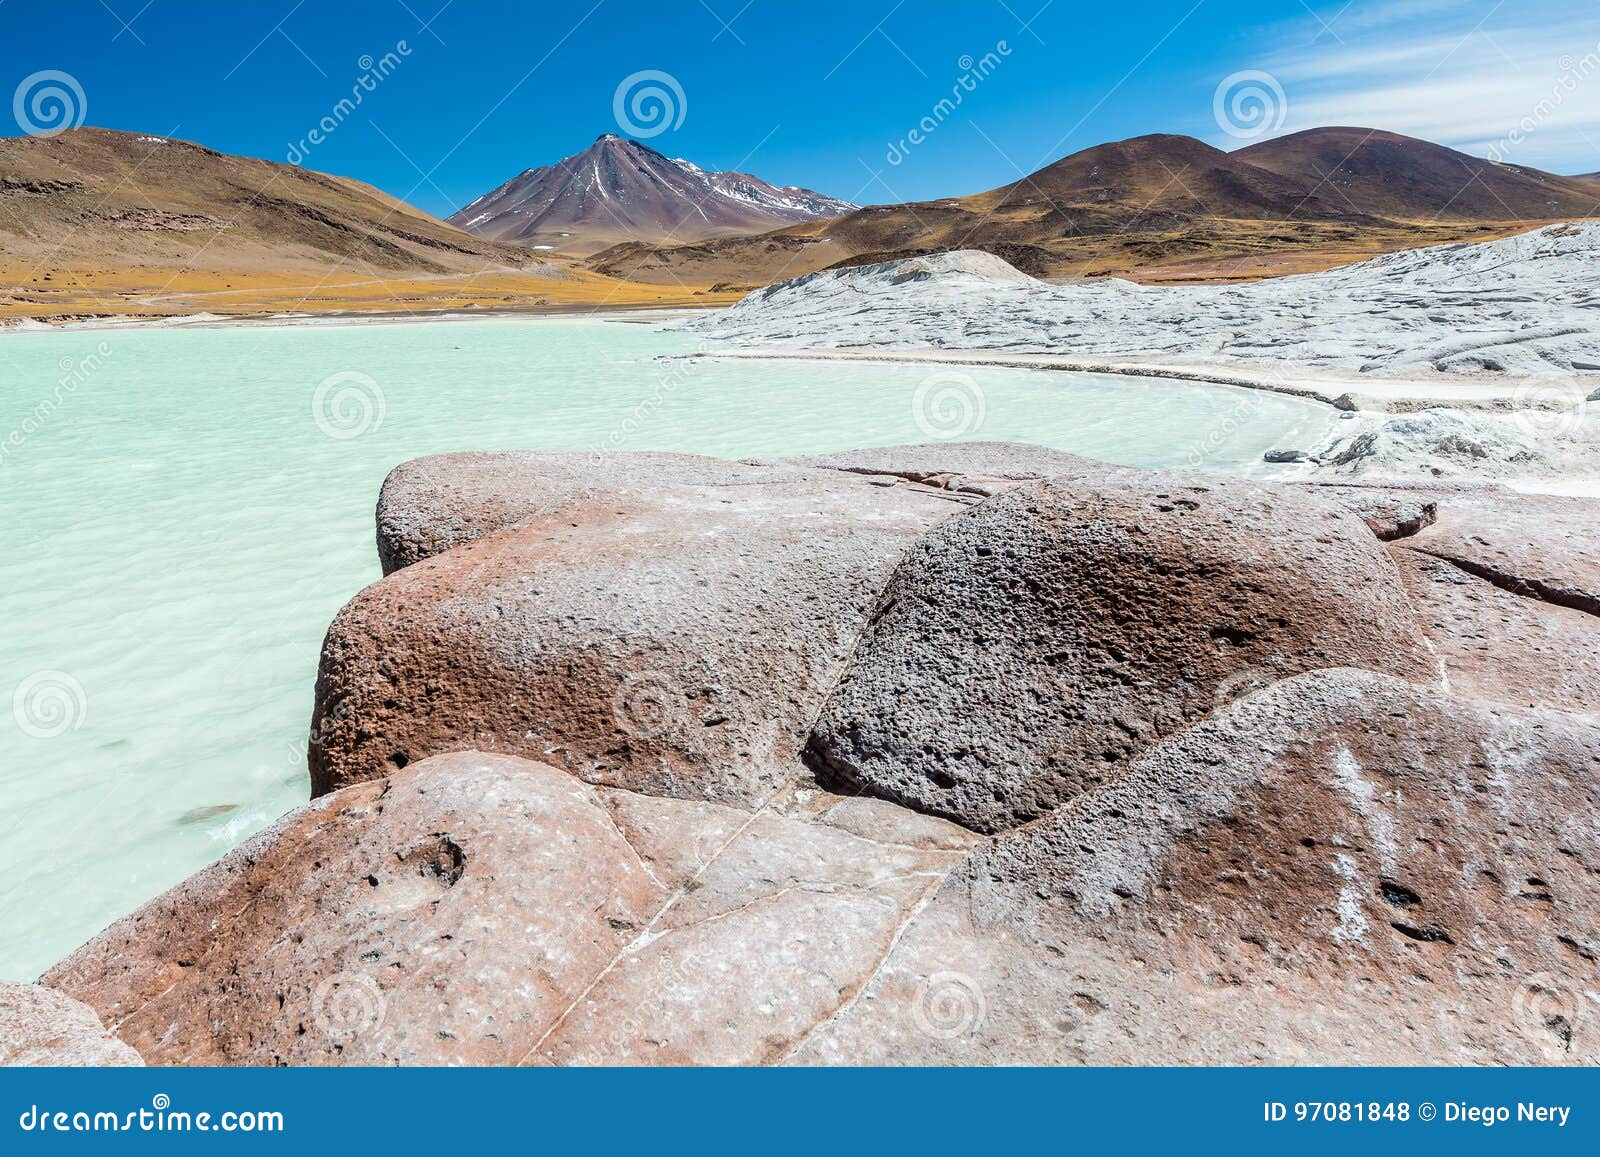 piedras rojas, volcano, snow, mountain, rocks, lake, white sand, turquoise water